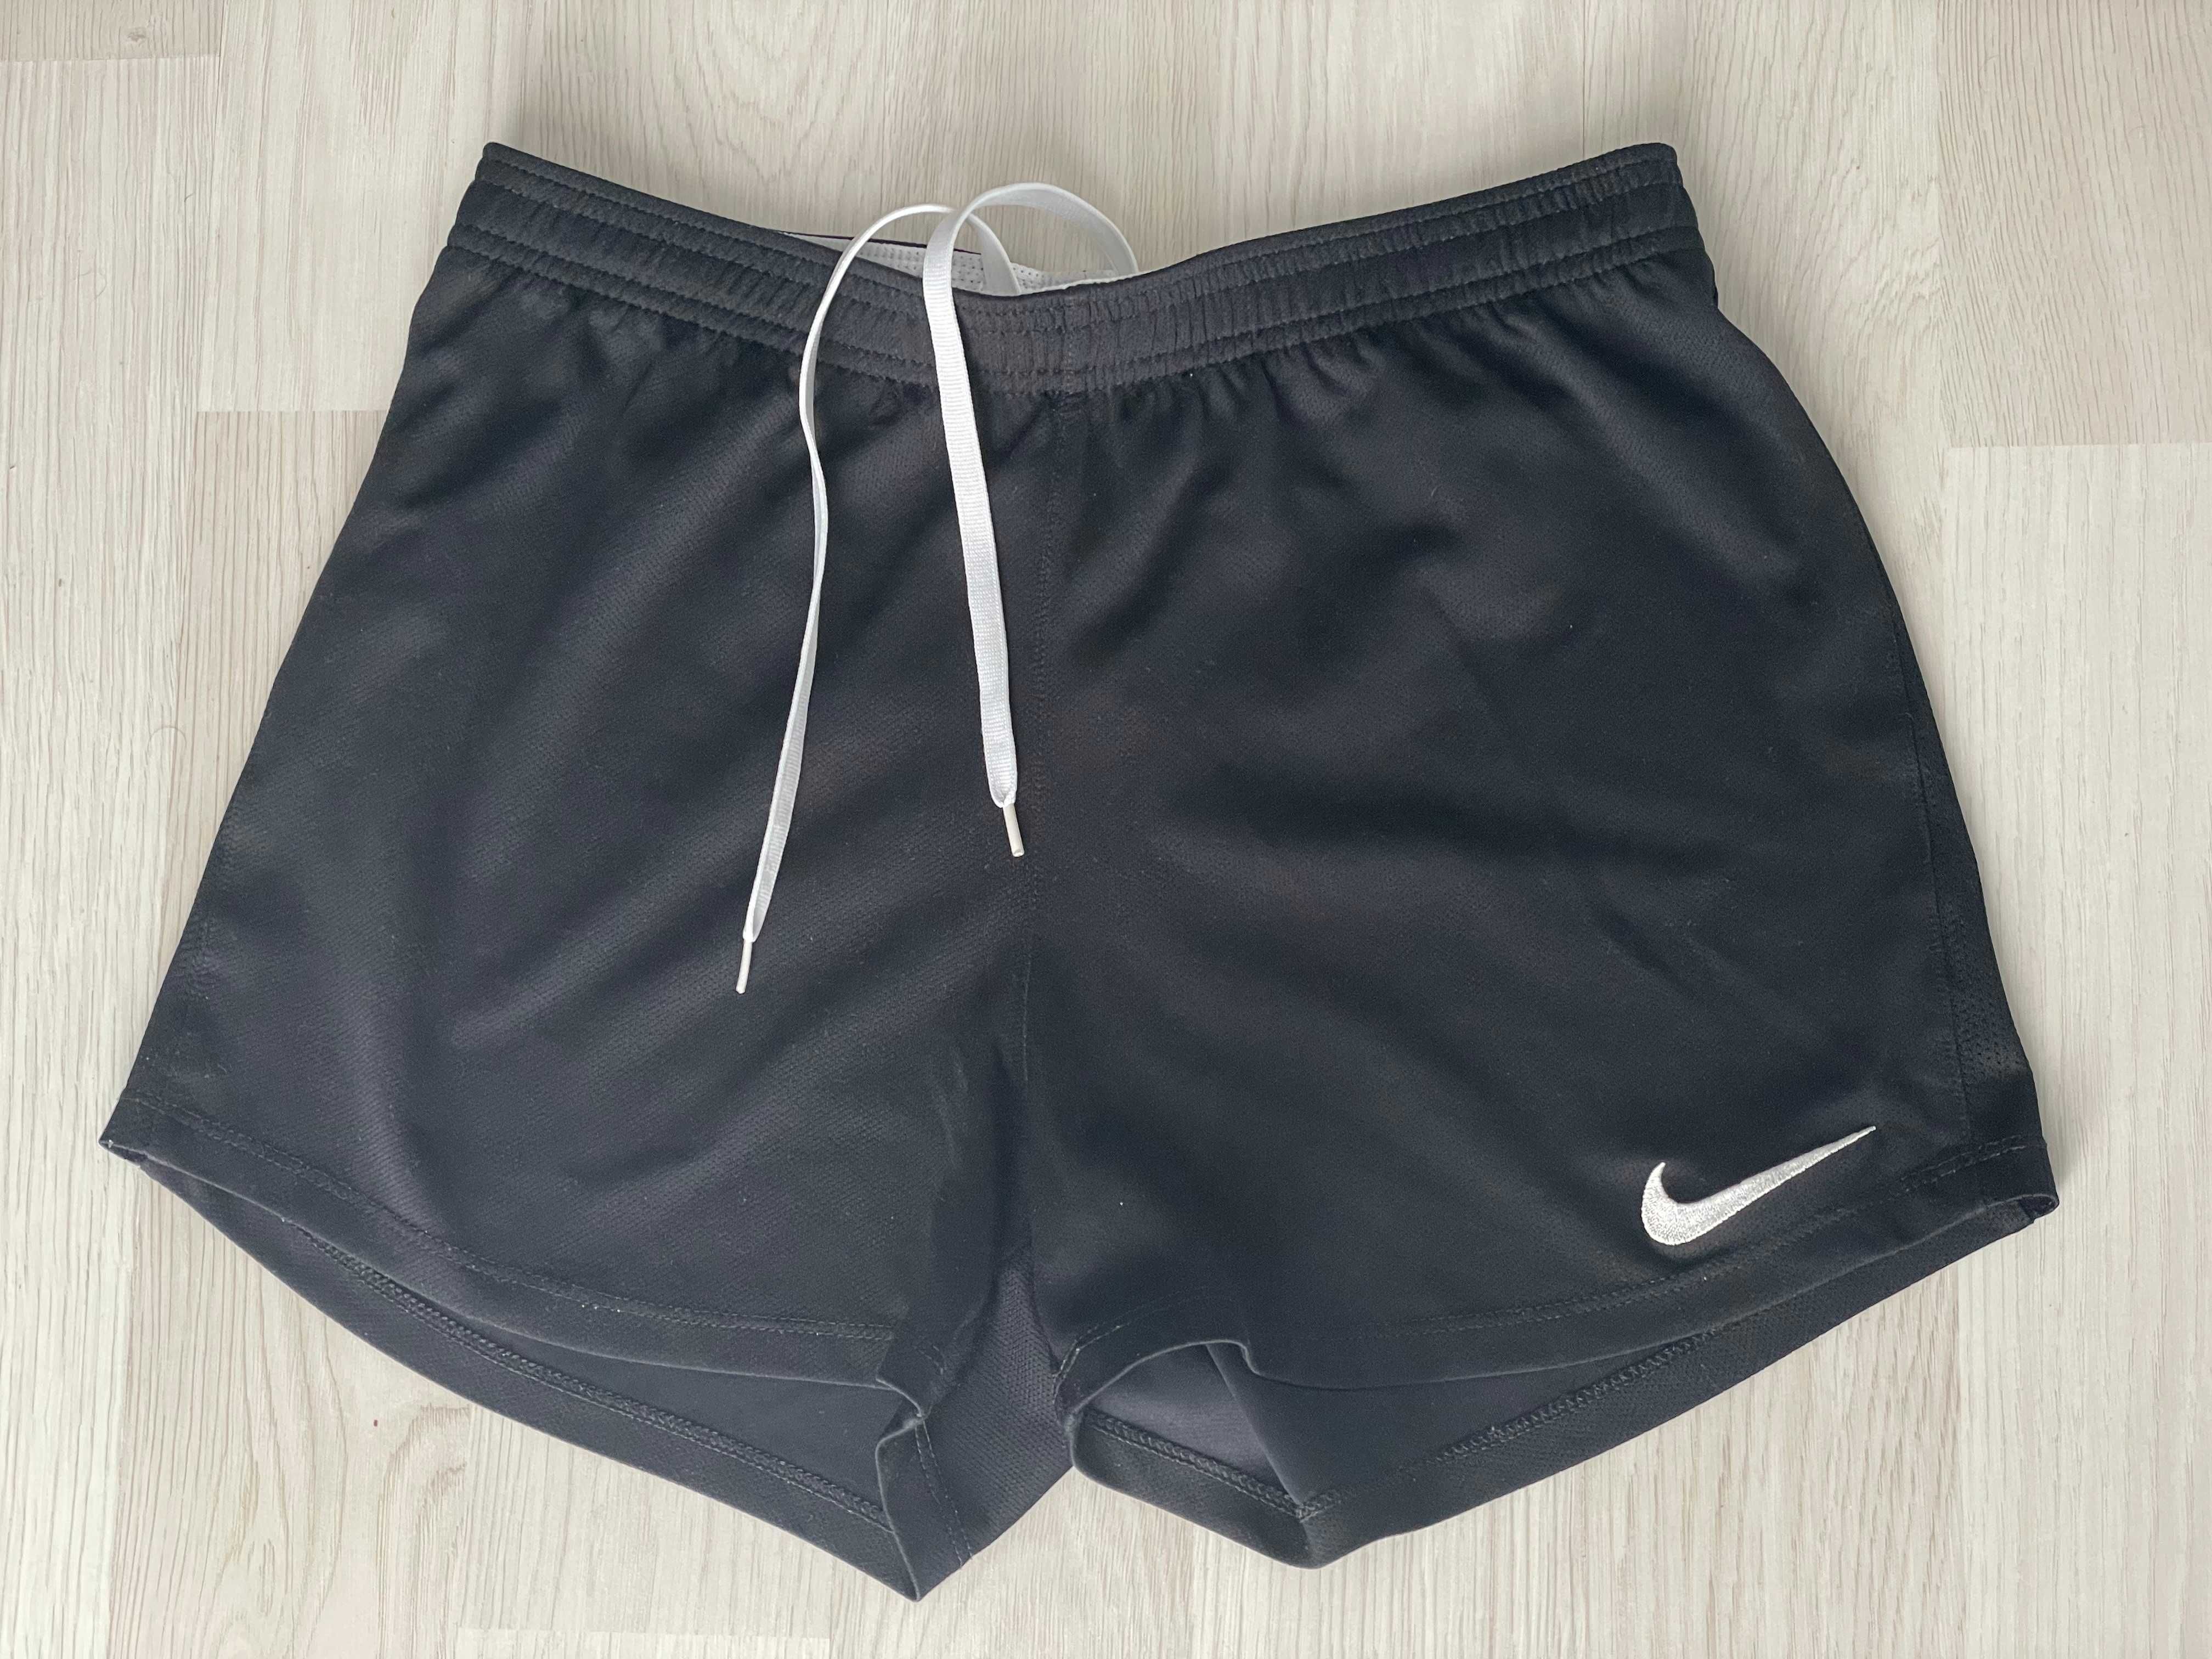 Pantaloni scurti - Nike, XS